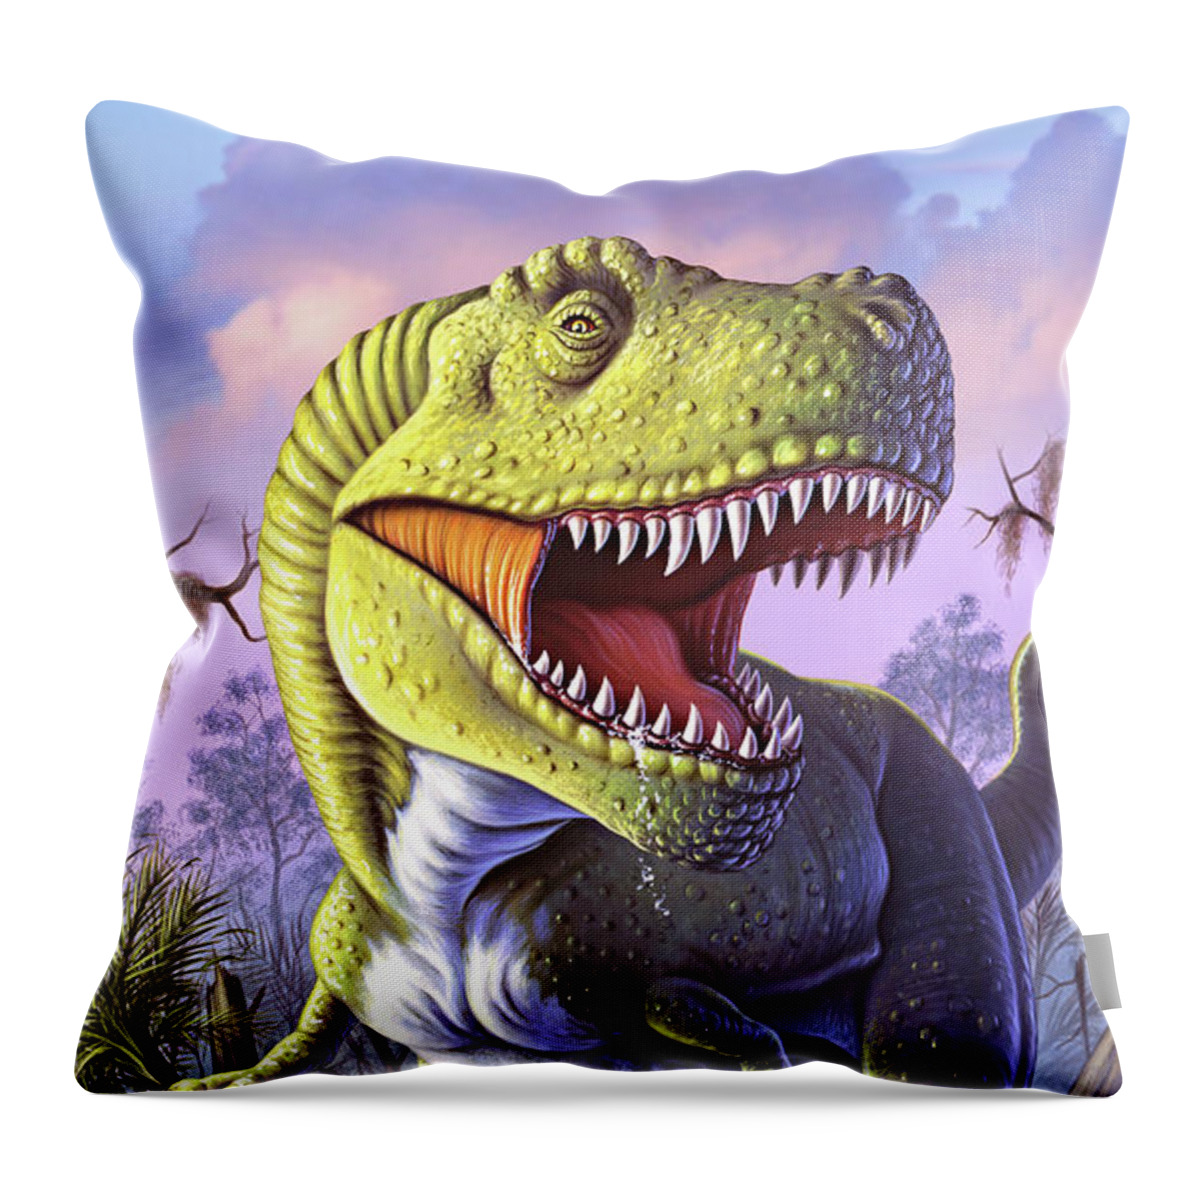 Dinosaur Throw Pillow featuring the mixed media Green Rex by Jerry LoFaro